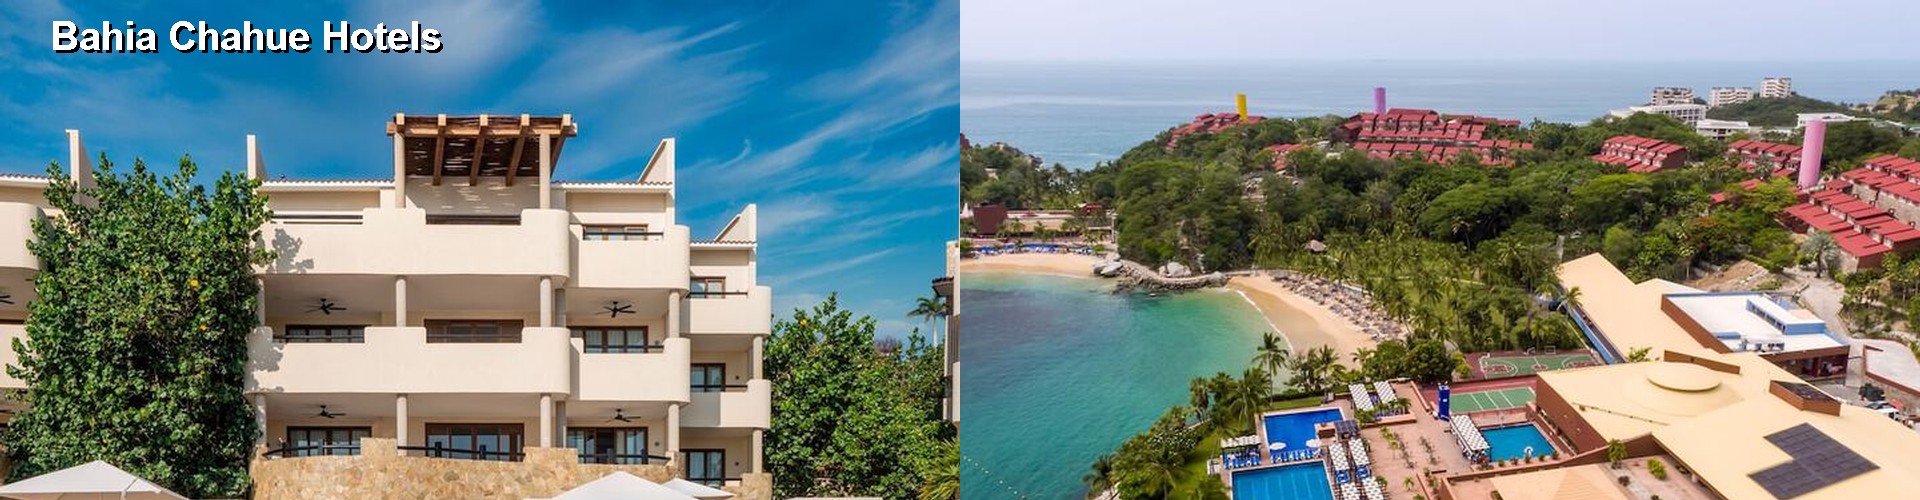 5 Best Hotels near Bahia Chahue